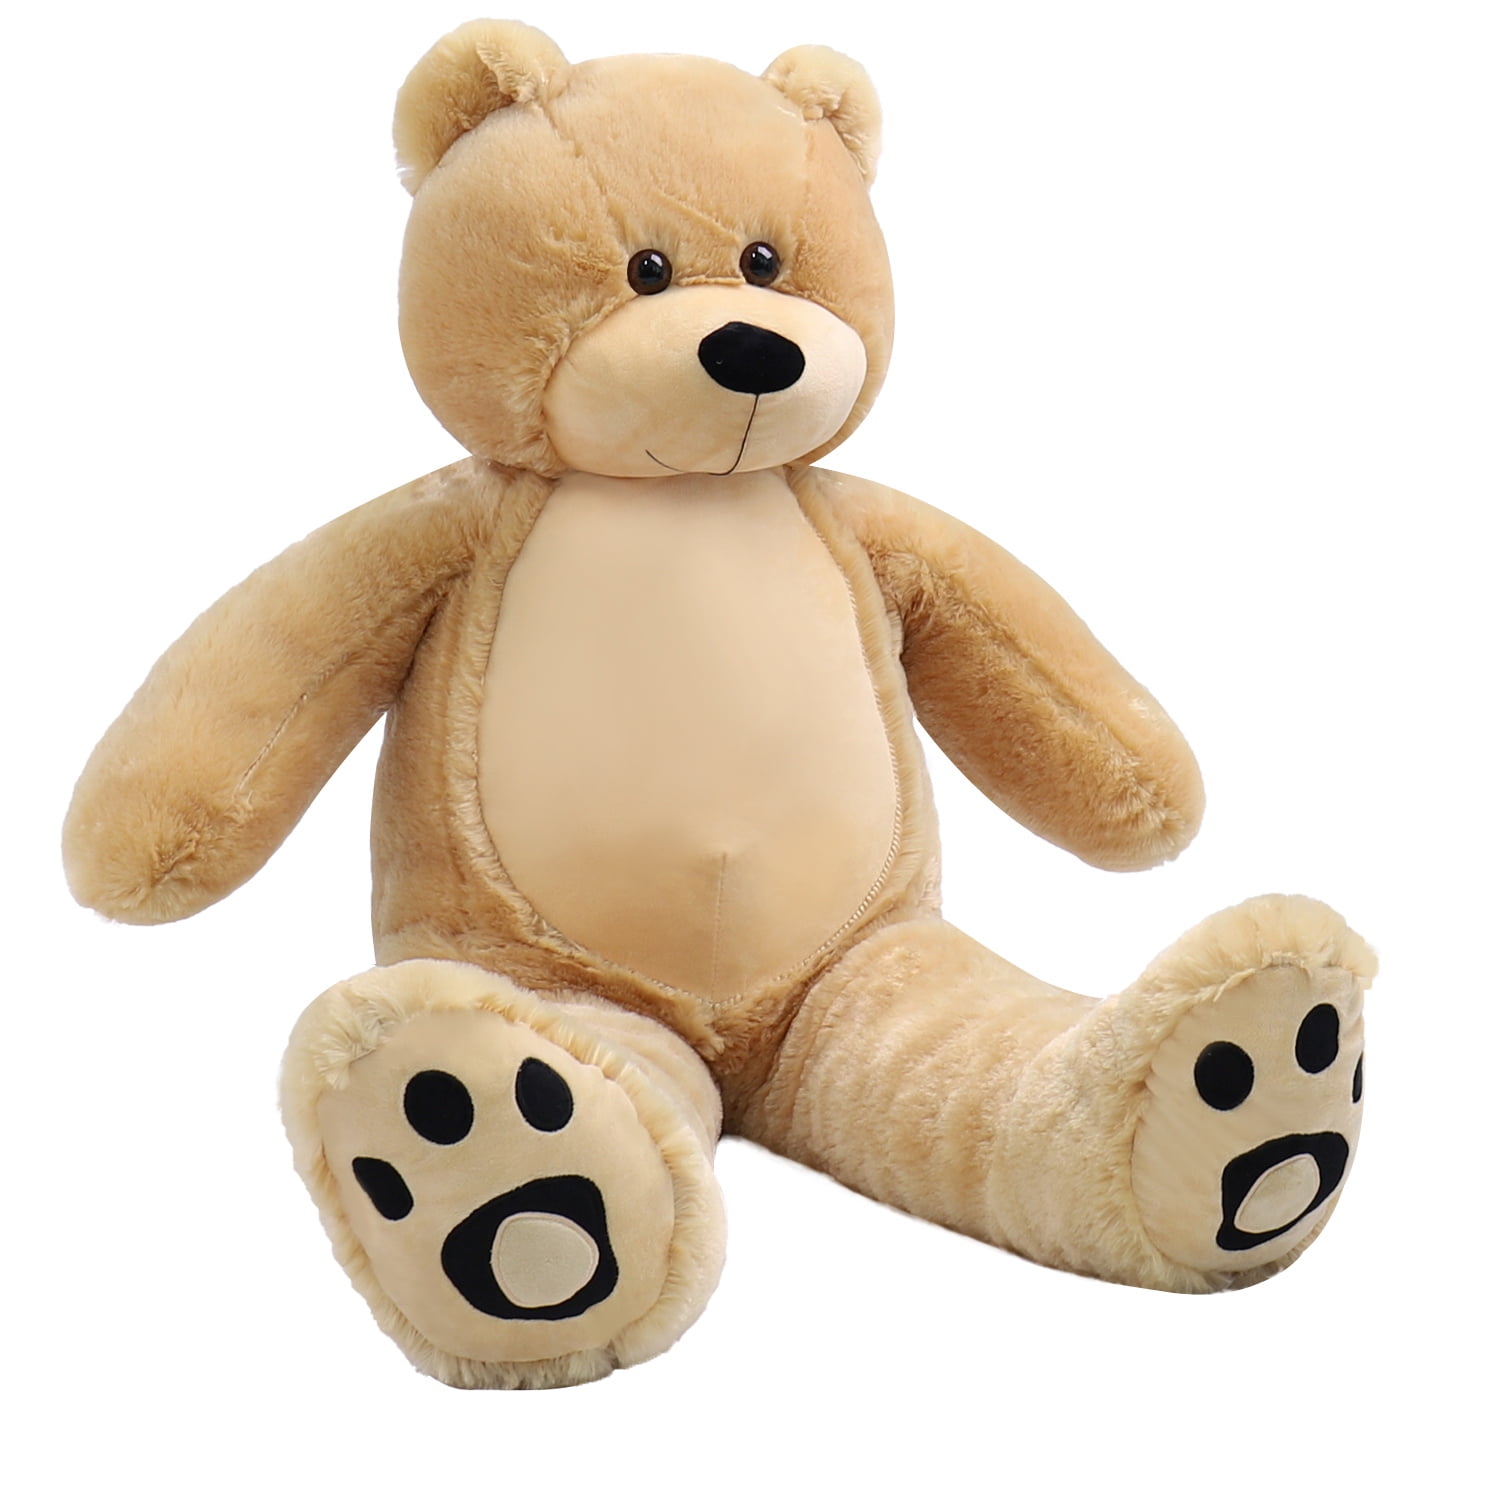 2019 Giant Big Huge Teddy Bear Plush Stuffed Animal Toy Doll Valentine Xmas Gift 